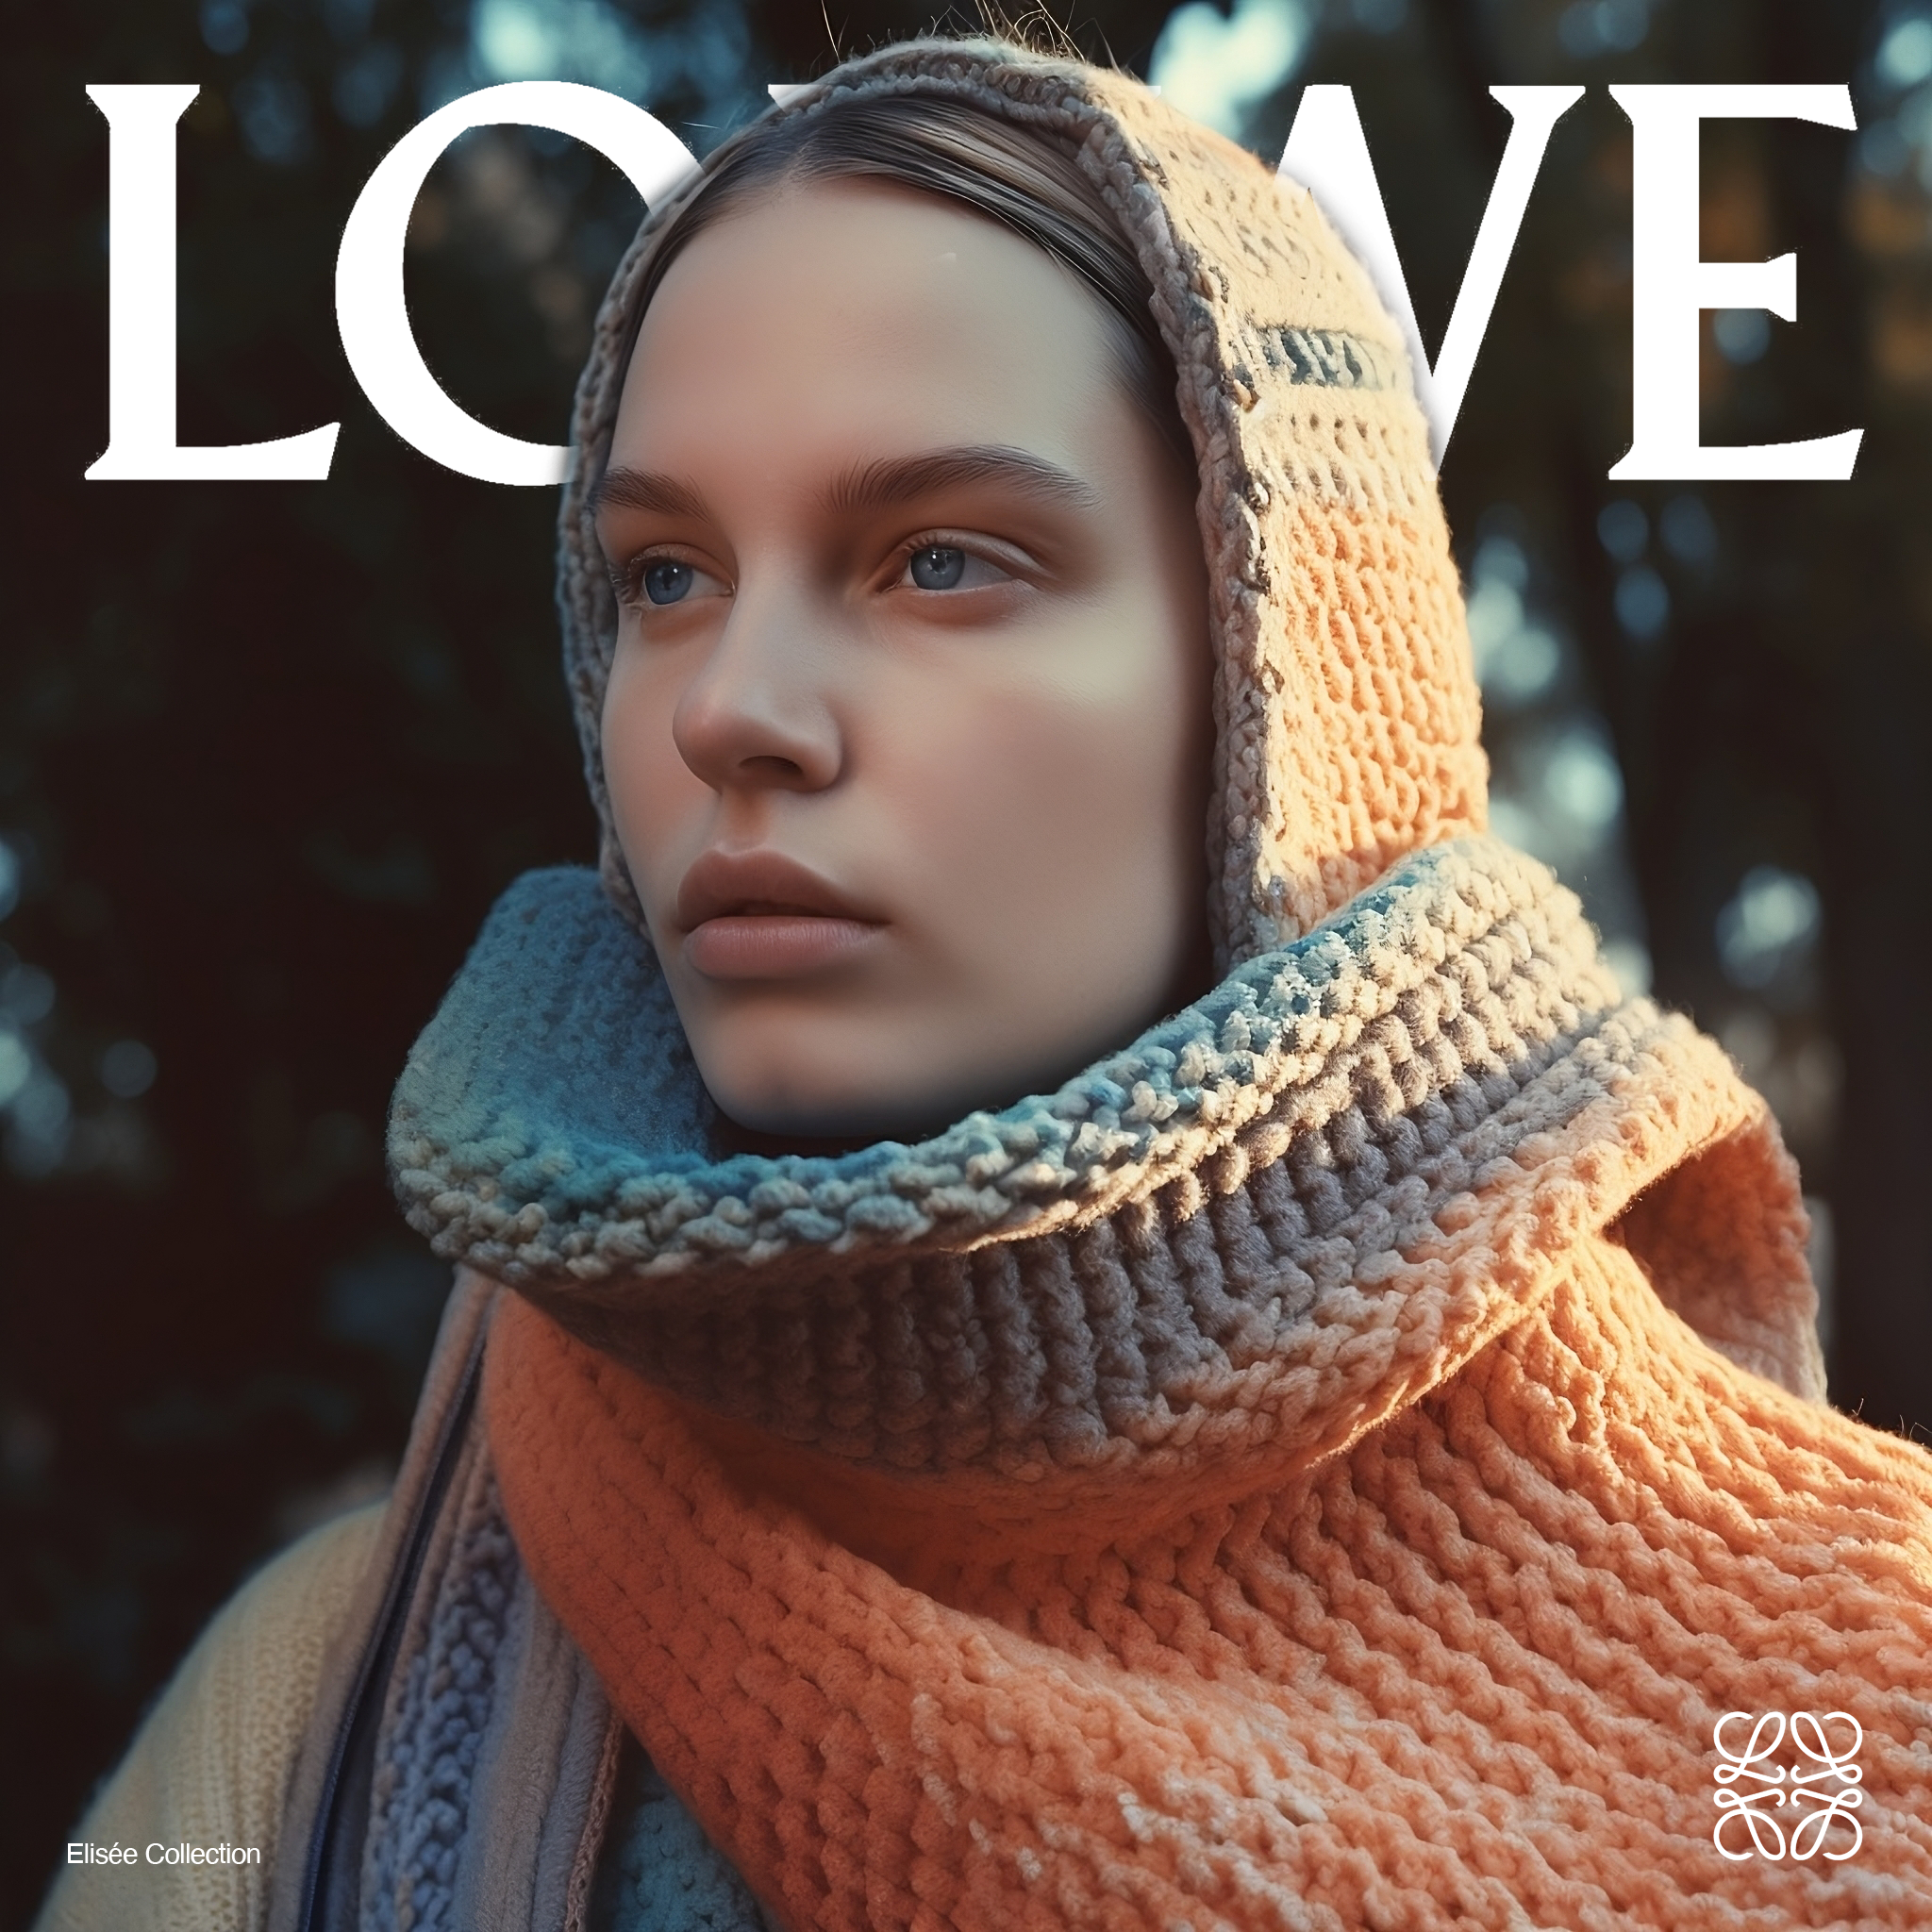 KJ_a_Loewe_winter_knitwear_oversized_scarf_light_colors_highly__d0b791fd-817c-4efb-a9a0-ffe492264a37-transformed